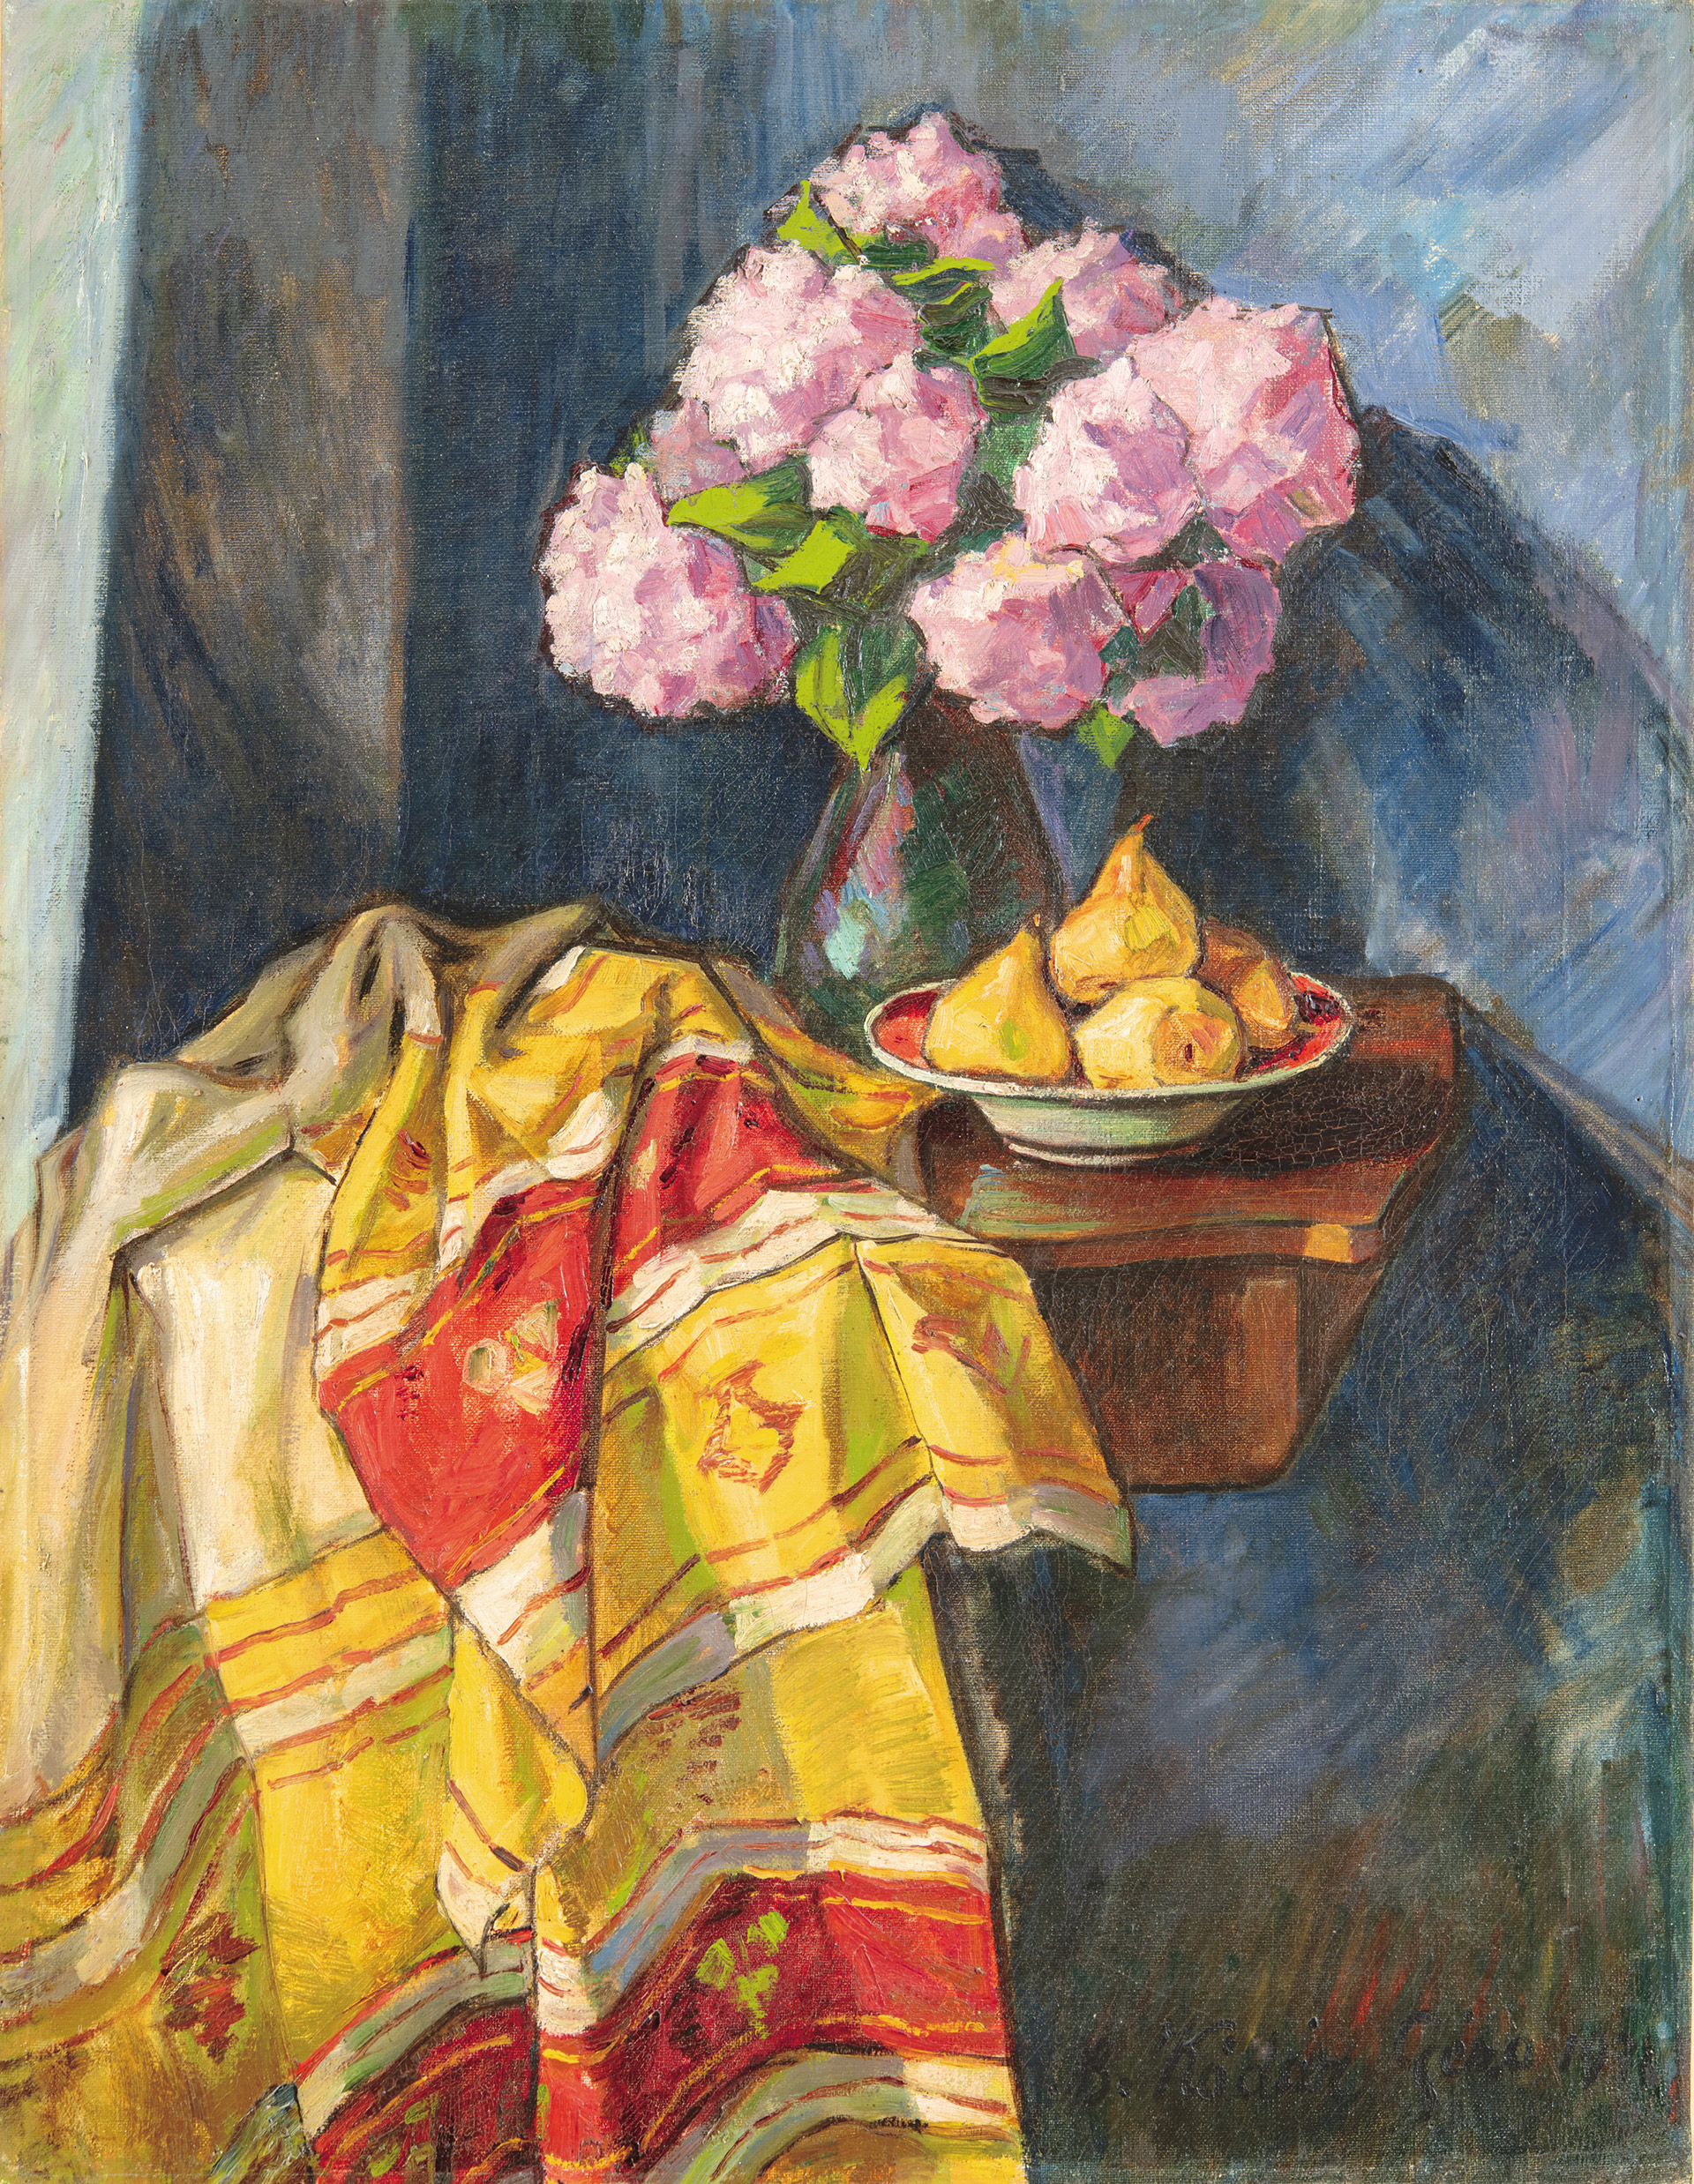 Kádár Géza (1878-1952) Asters and Pears, 1931